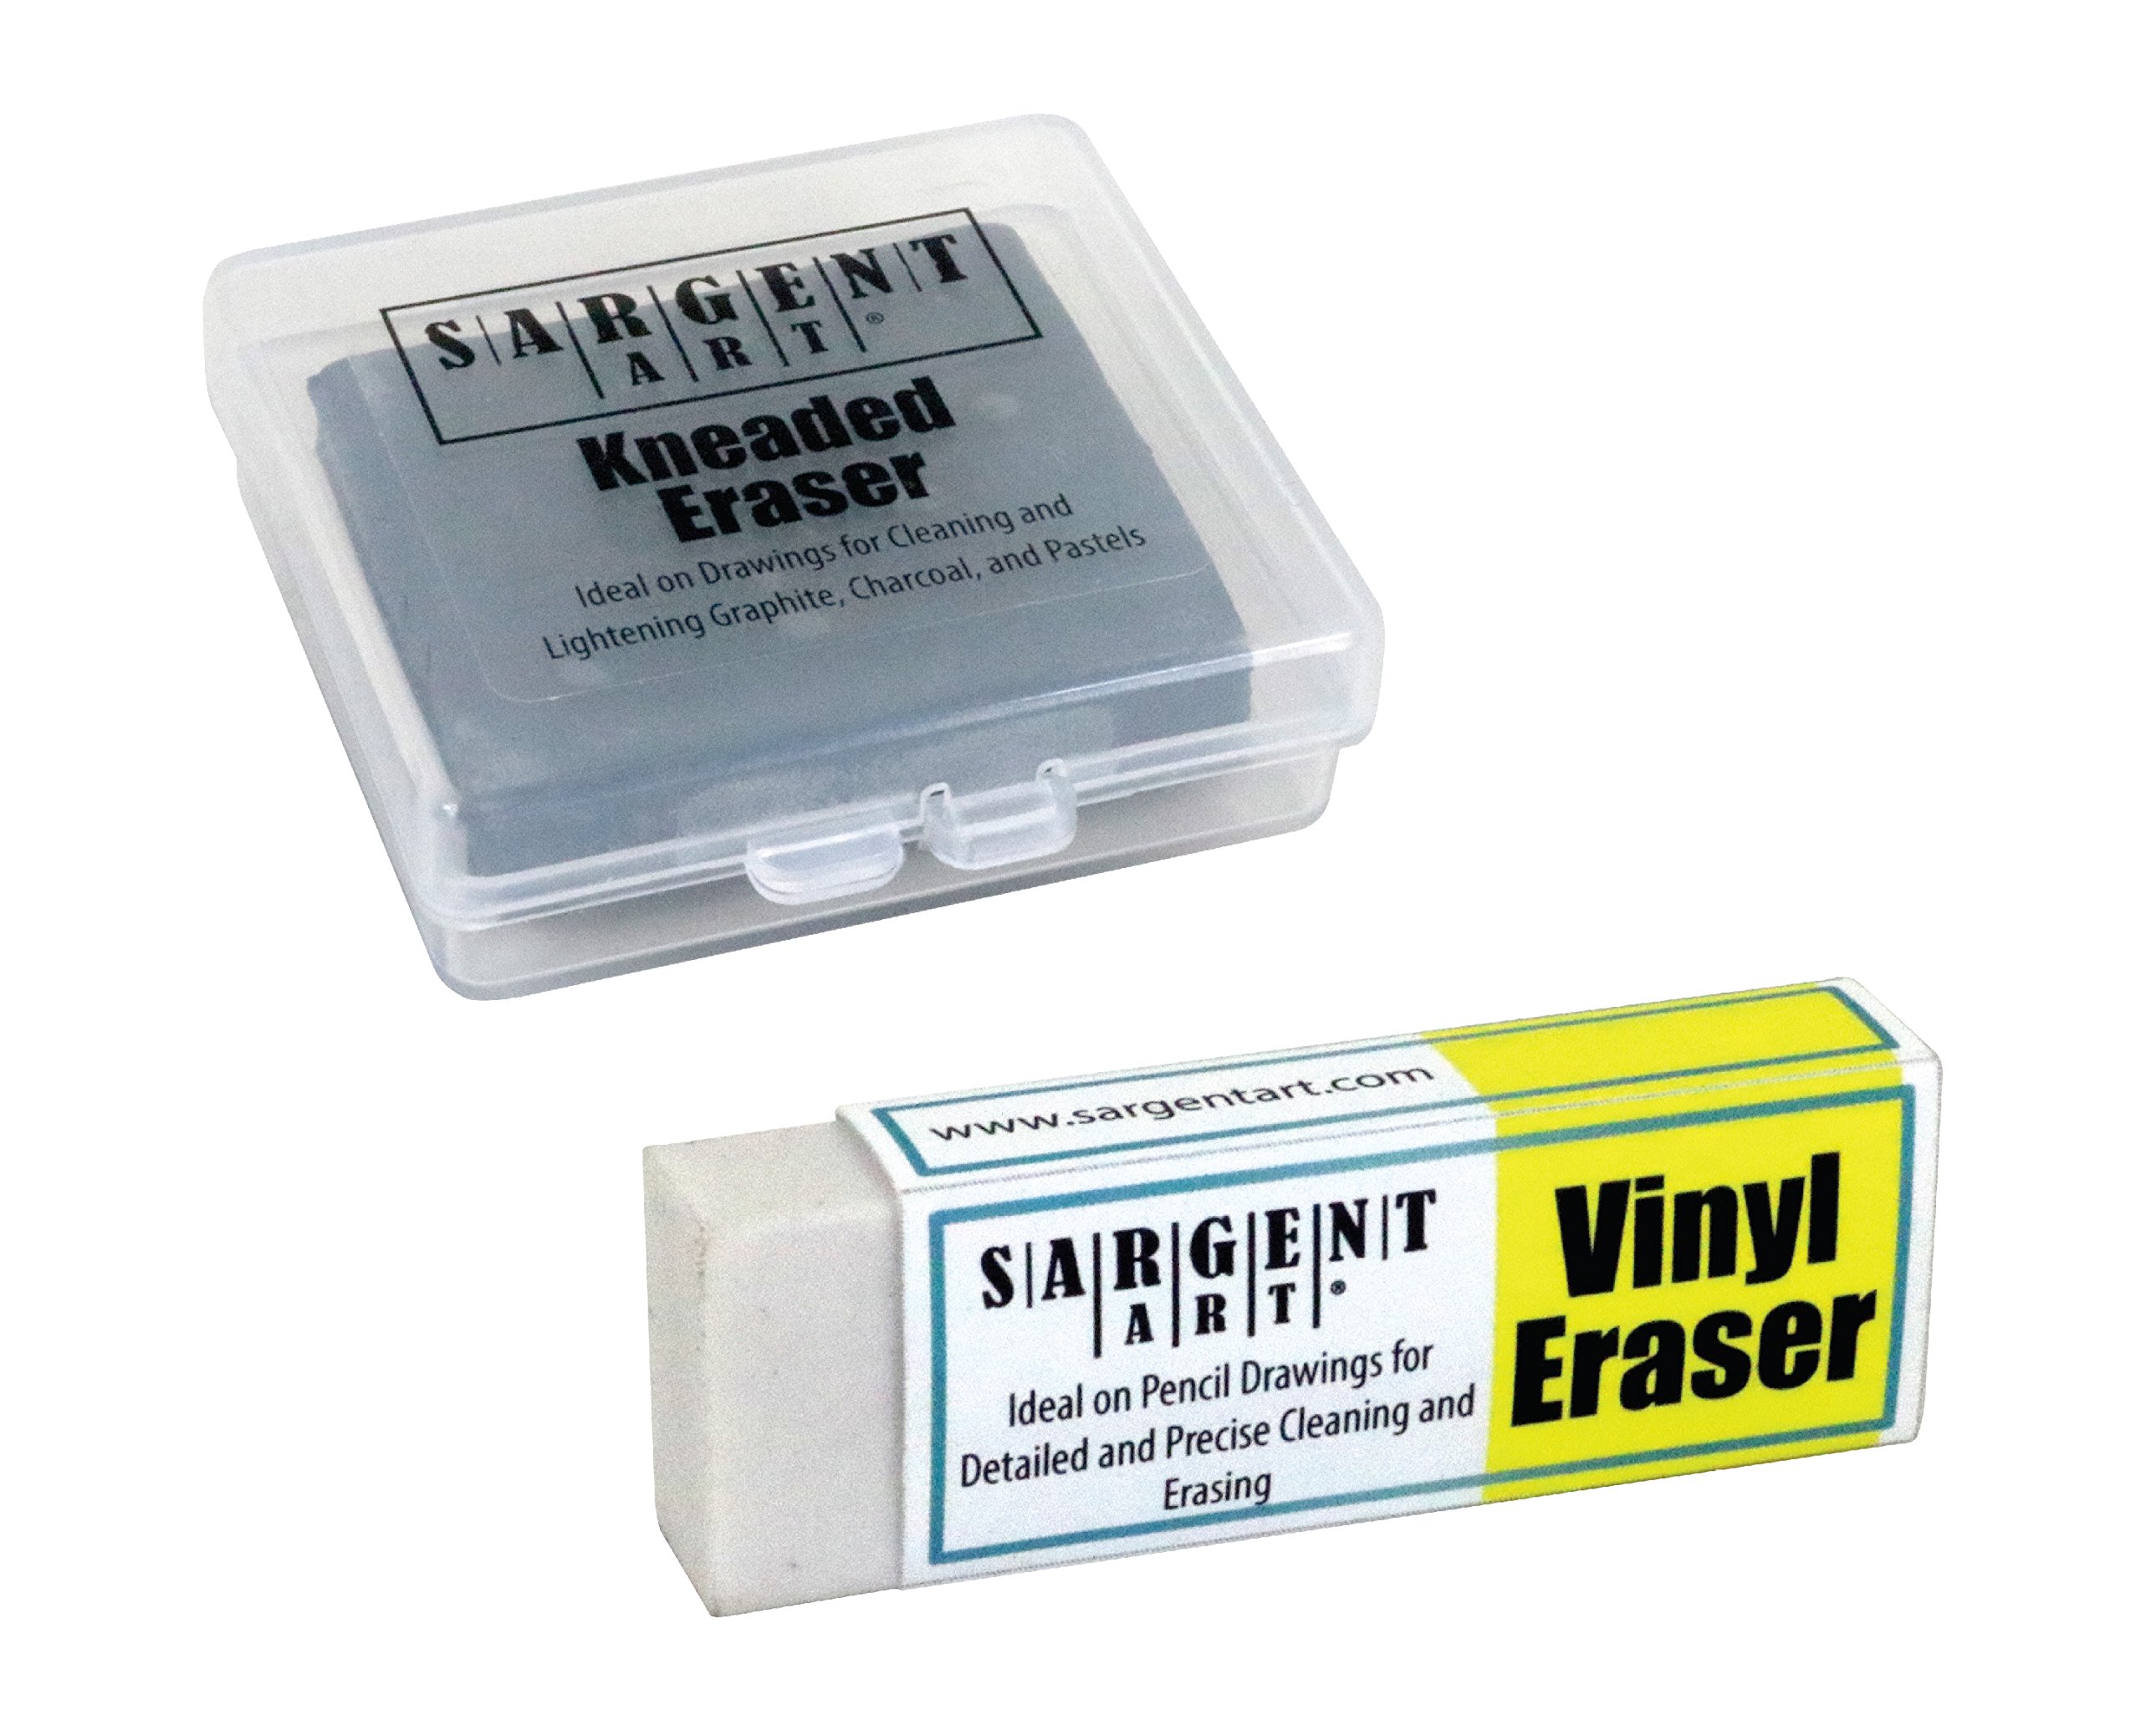 White Vinyl Eraser